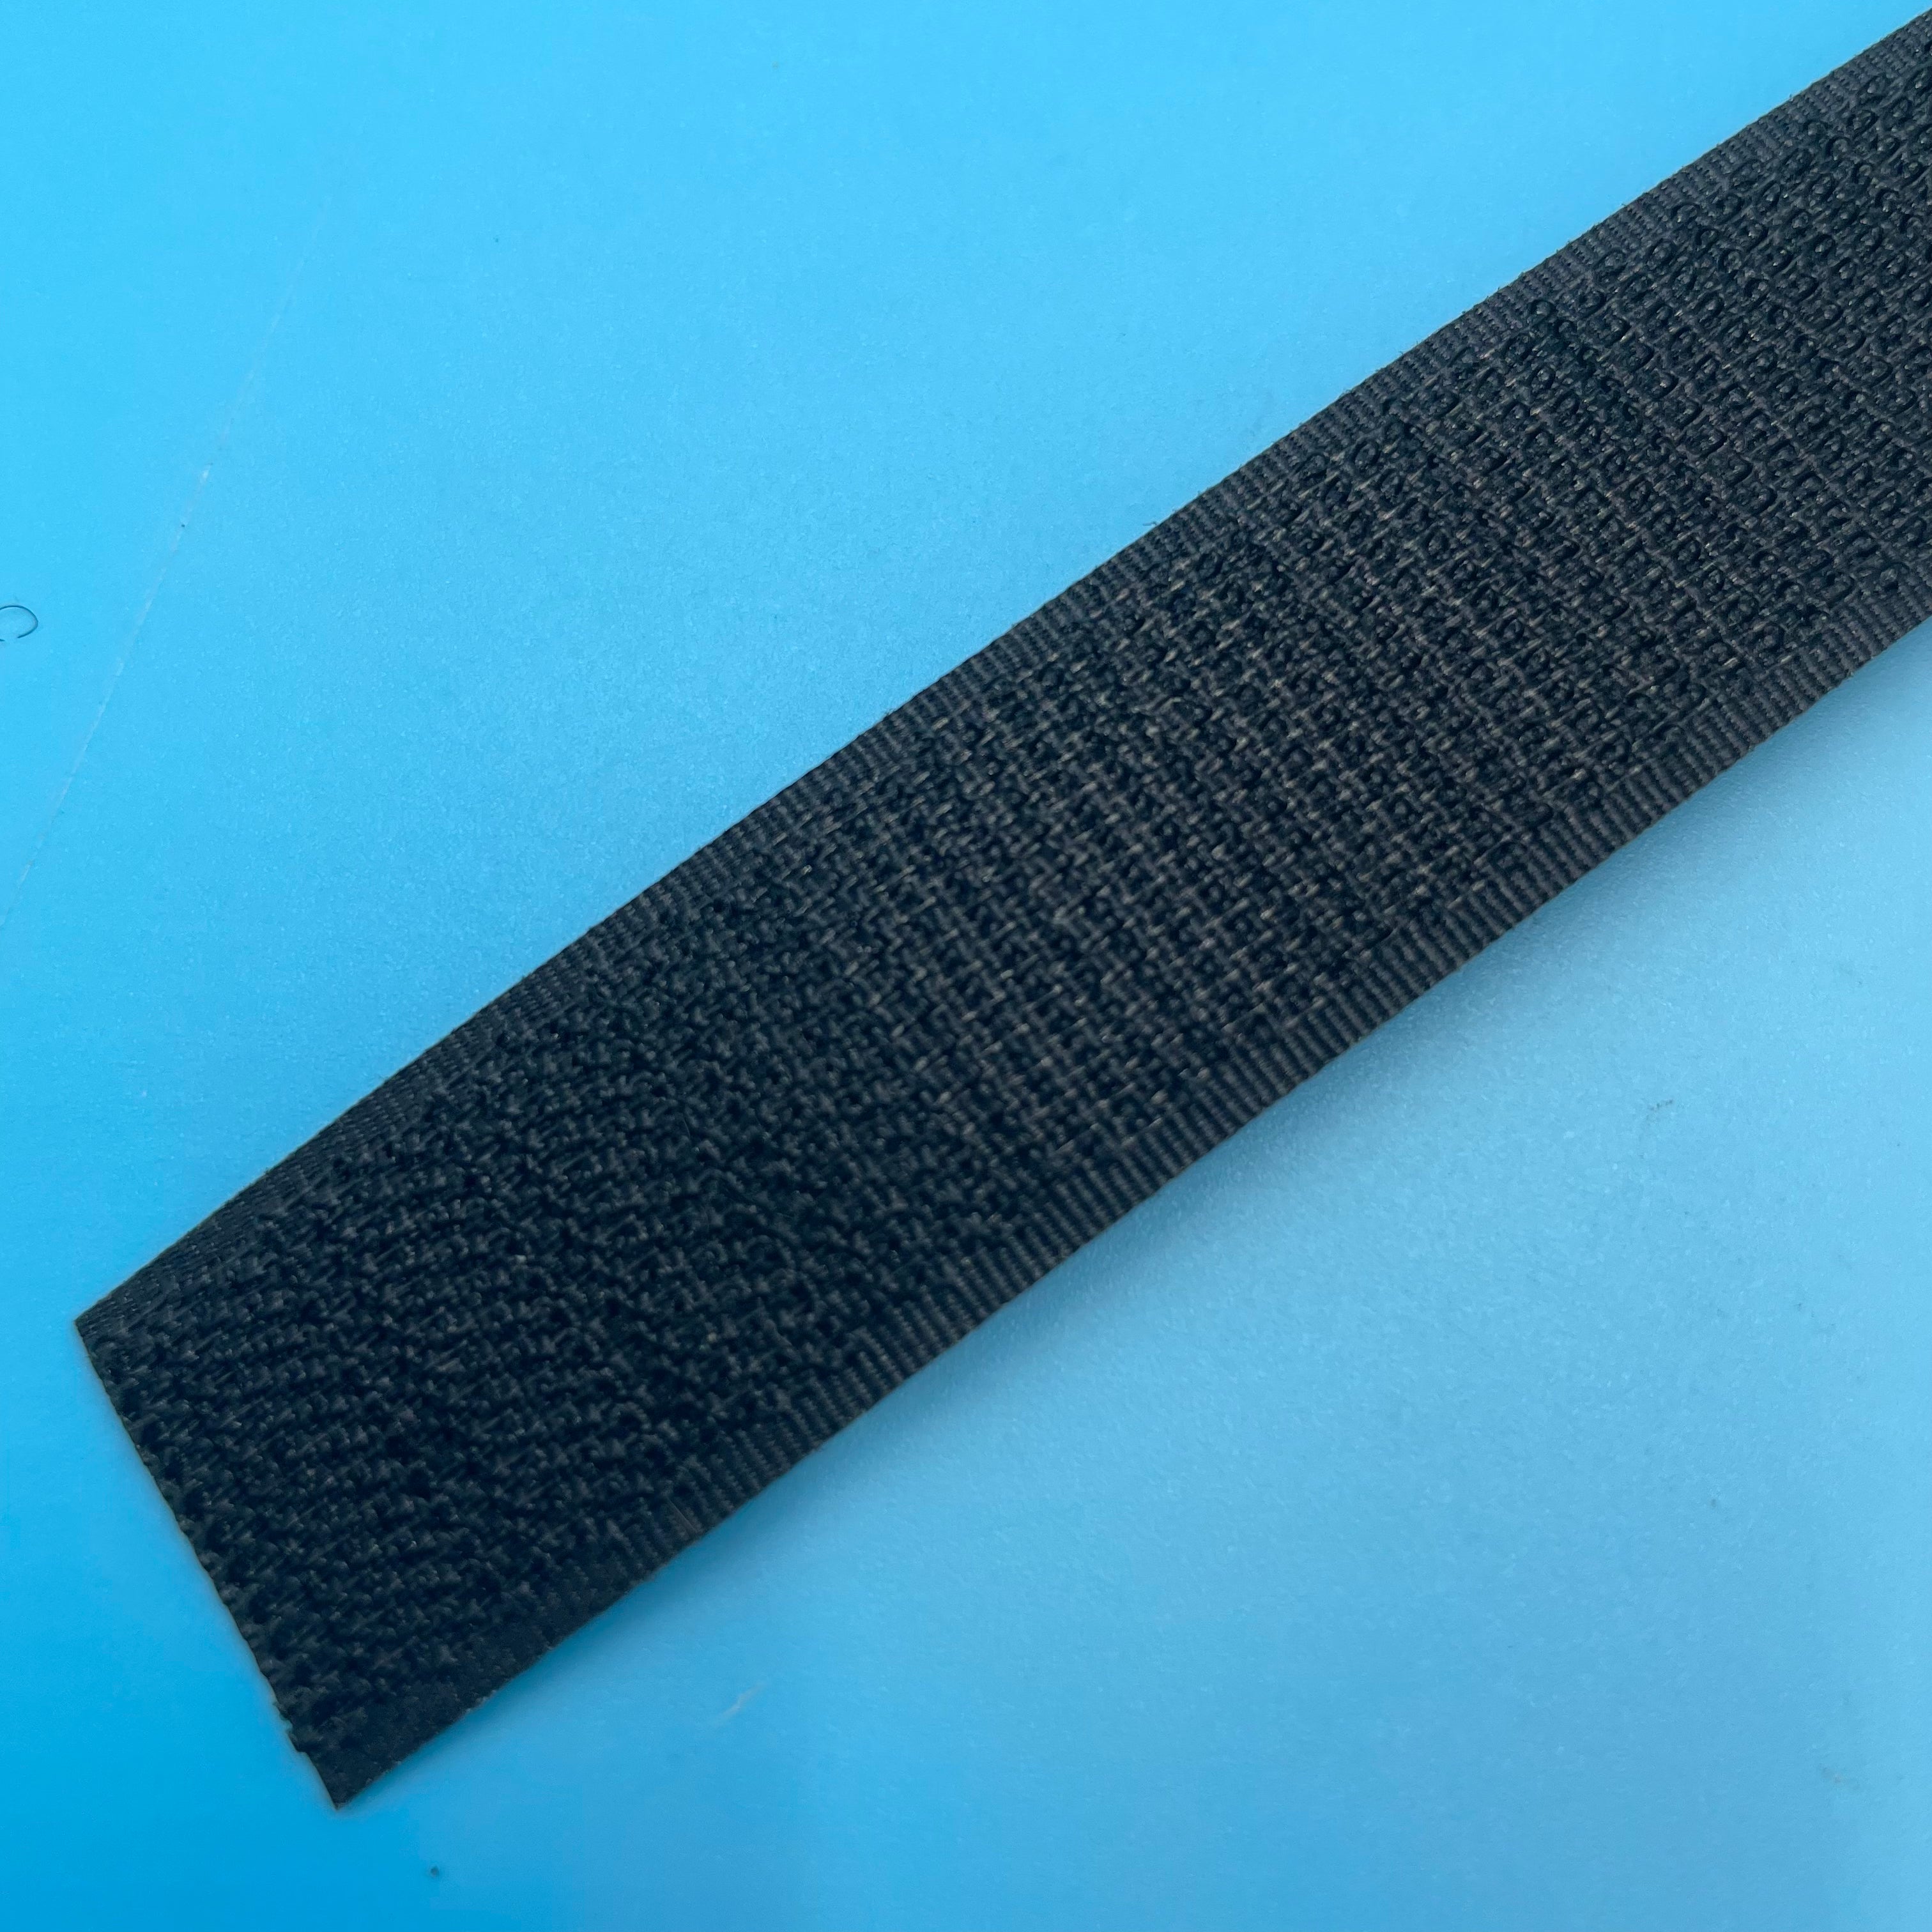 VELCRO® Brand Sew On Hook Tape Strips Black